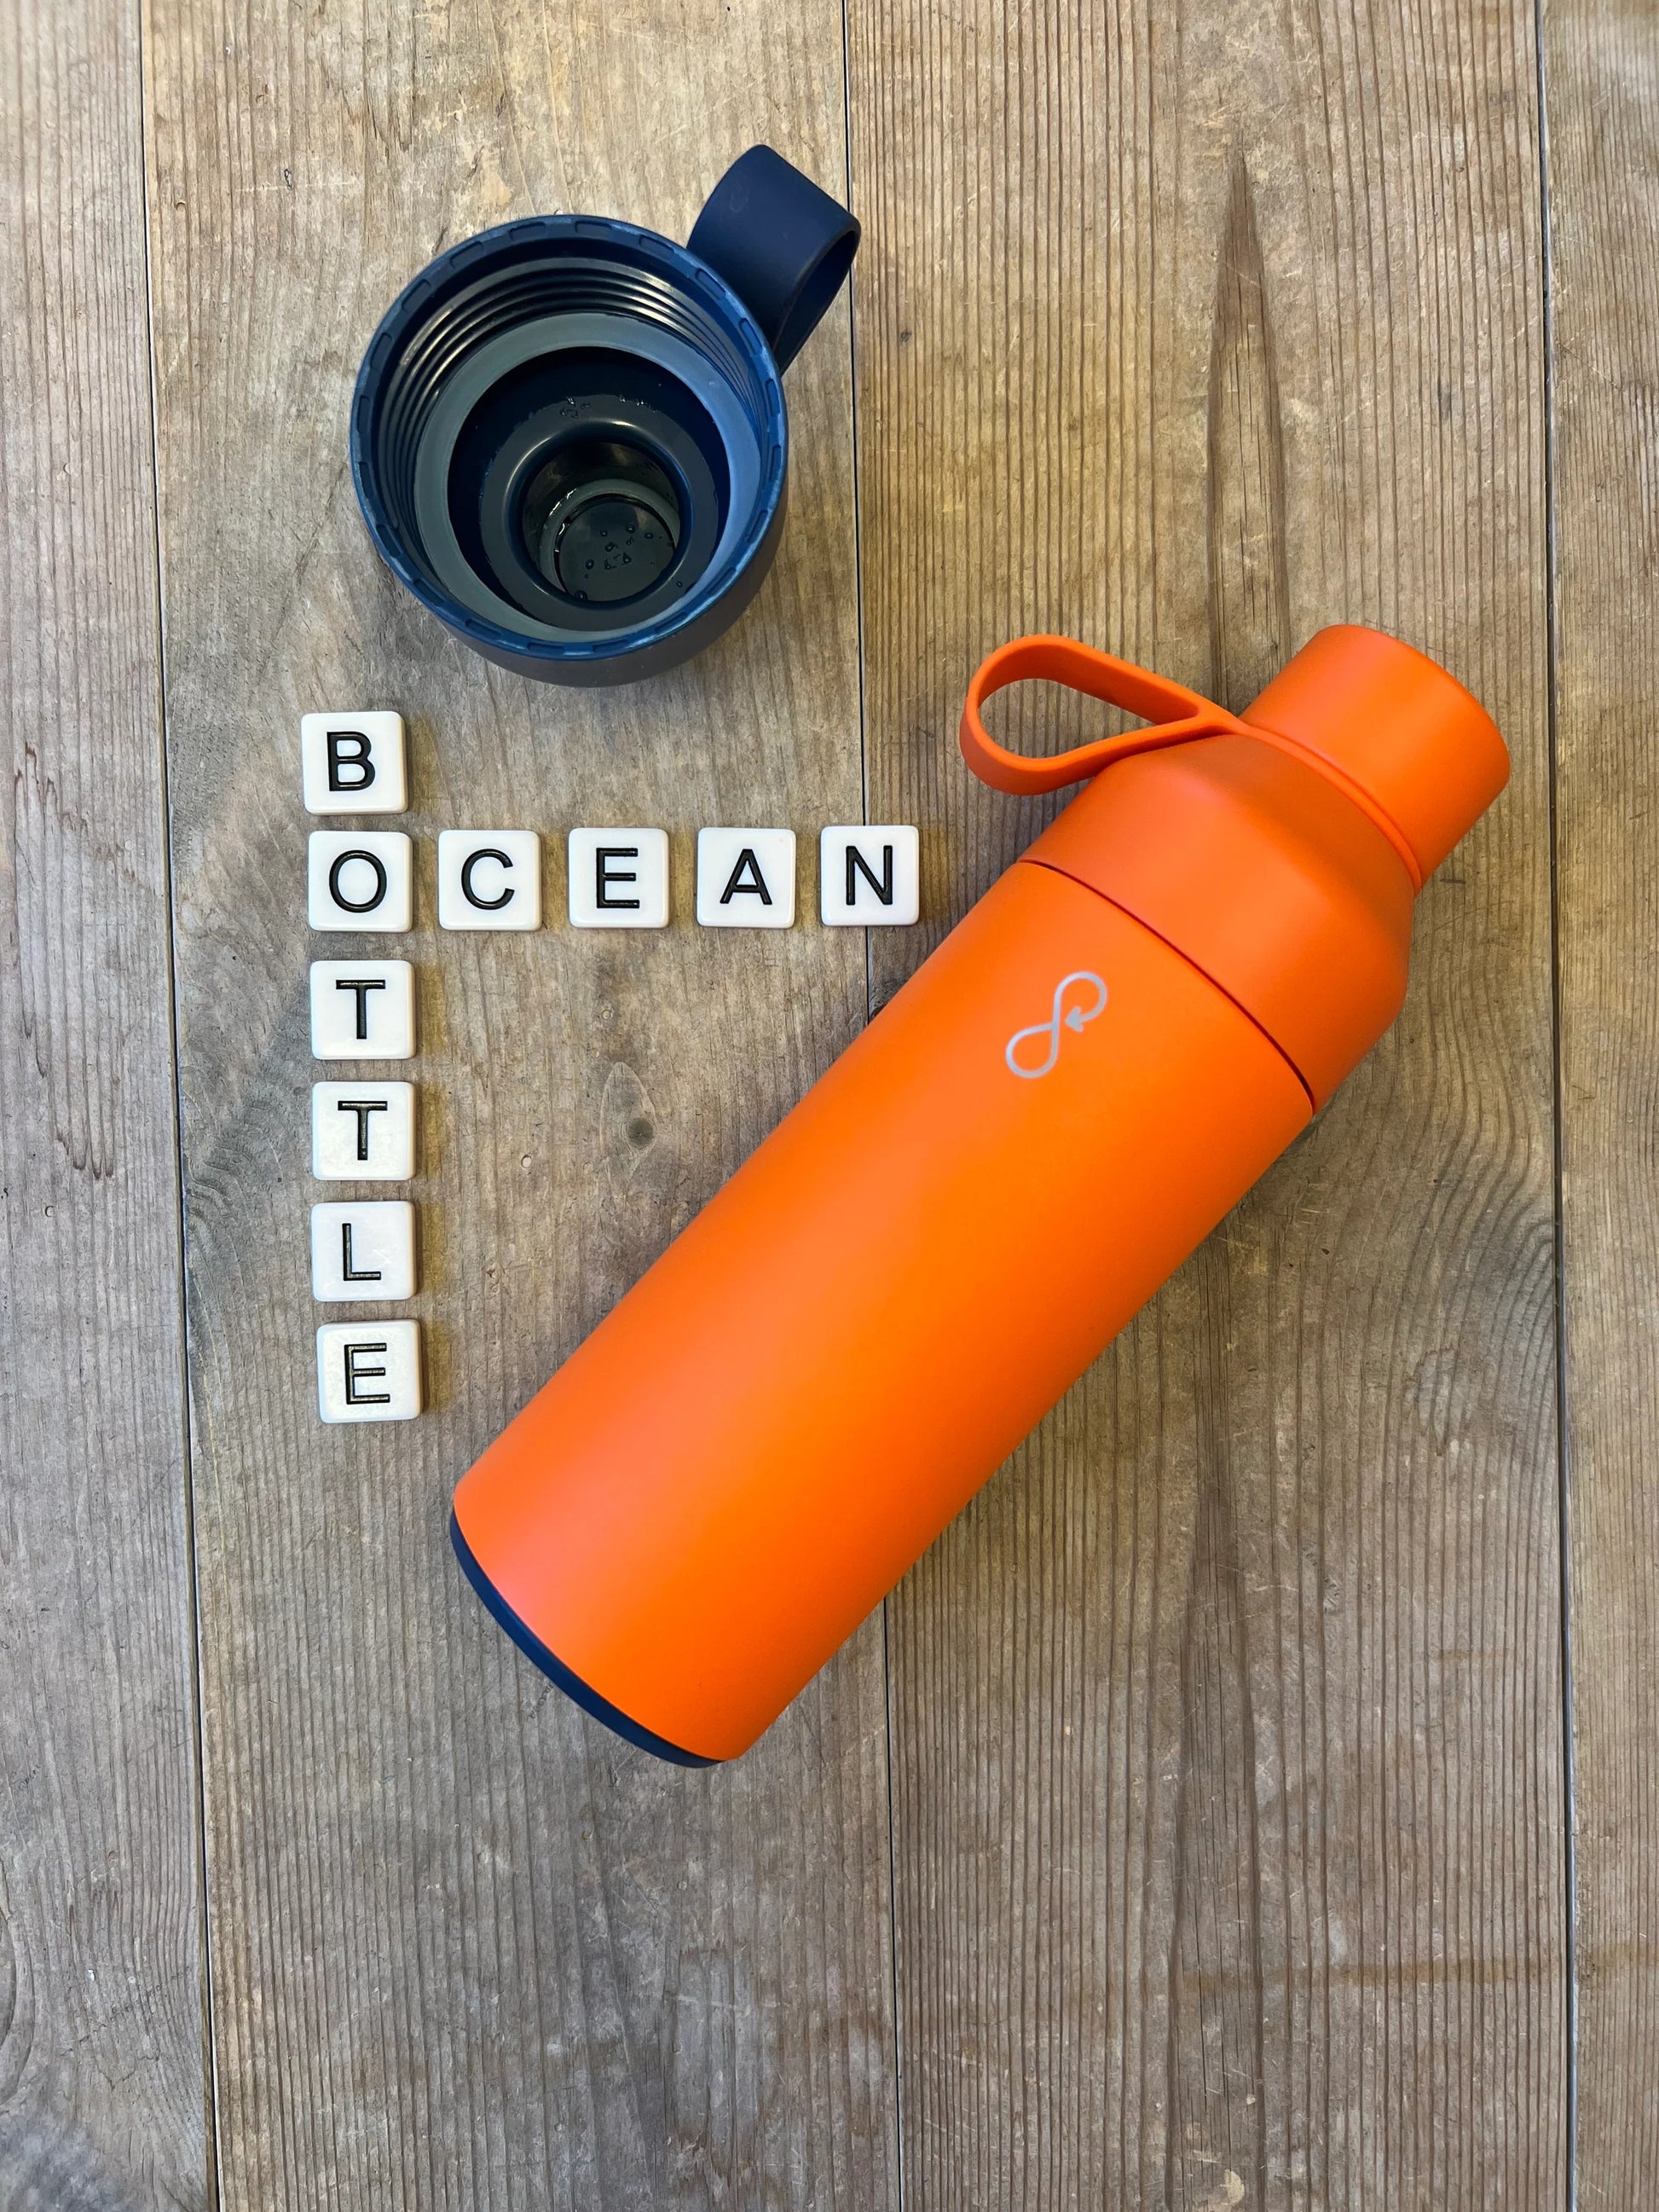 Ocean Bottle Original drikkeflaske 500 ml i fargen Sun.